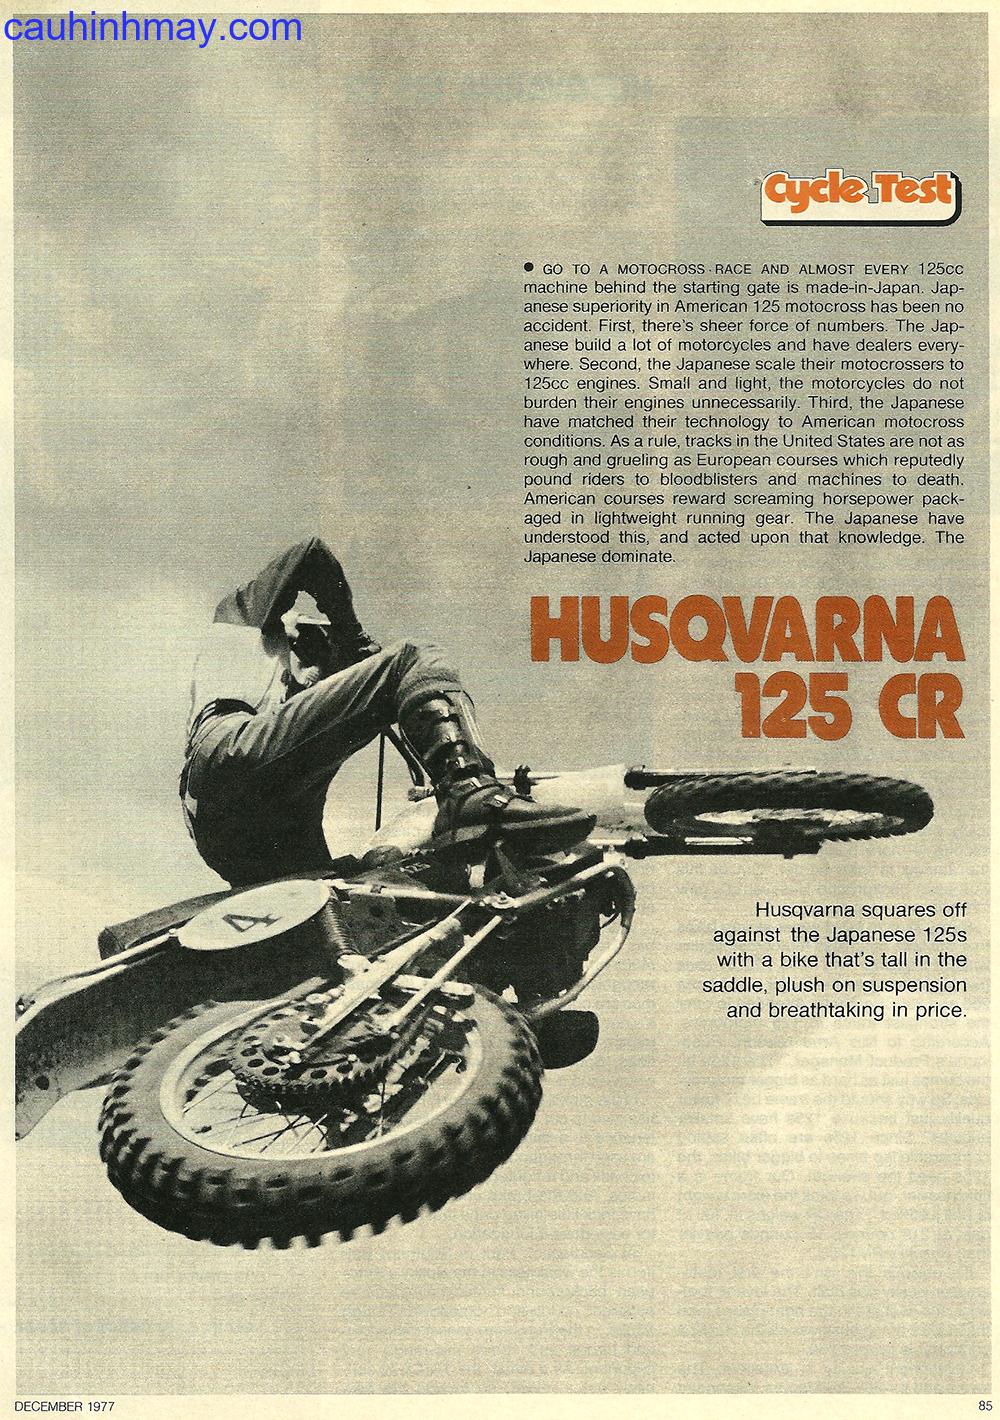 1977 HUSQVARNA 125CR - cauhinhmay.com